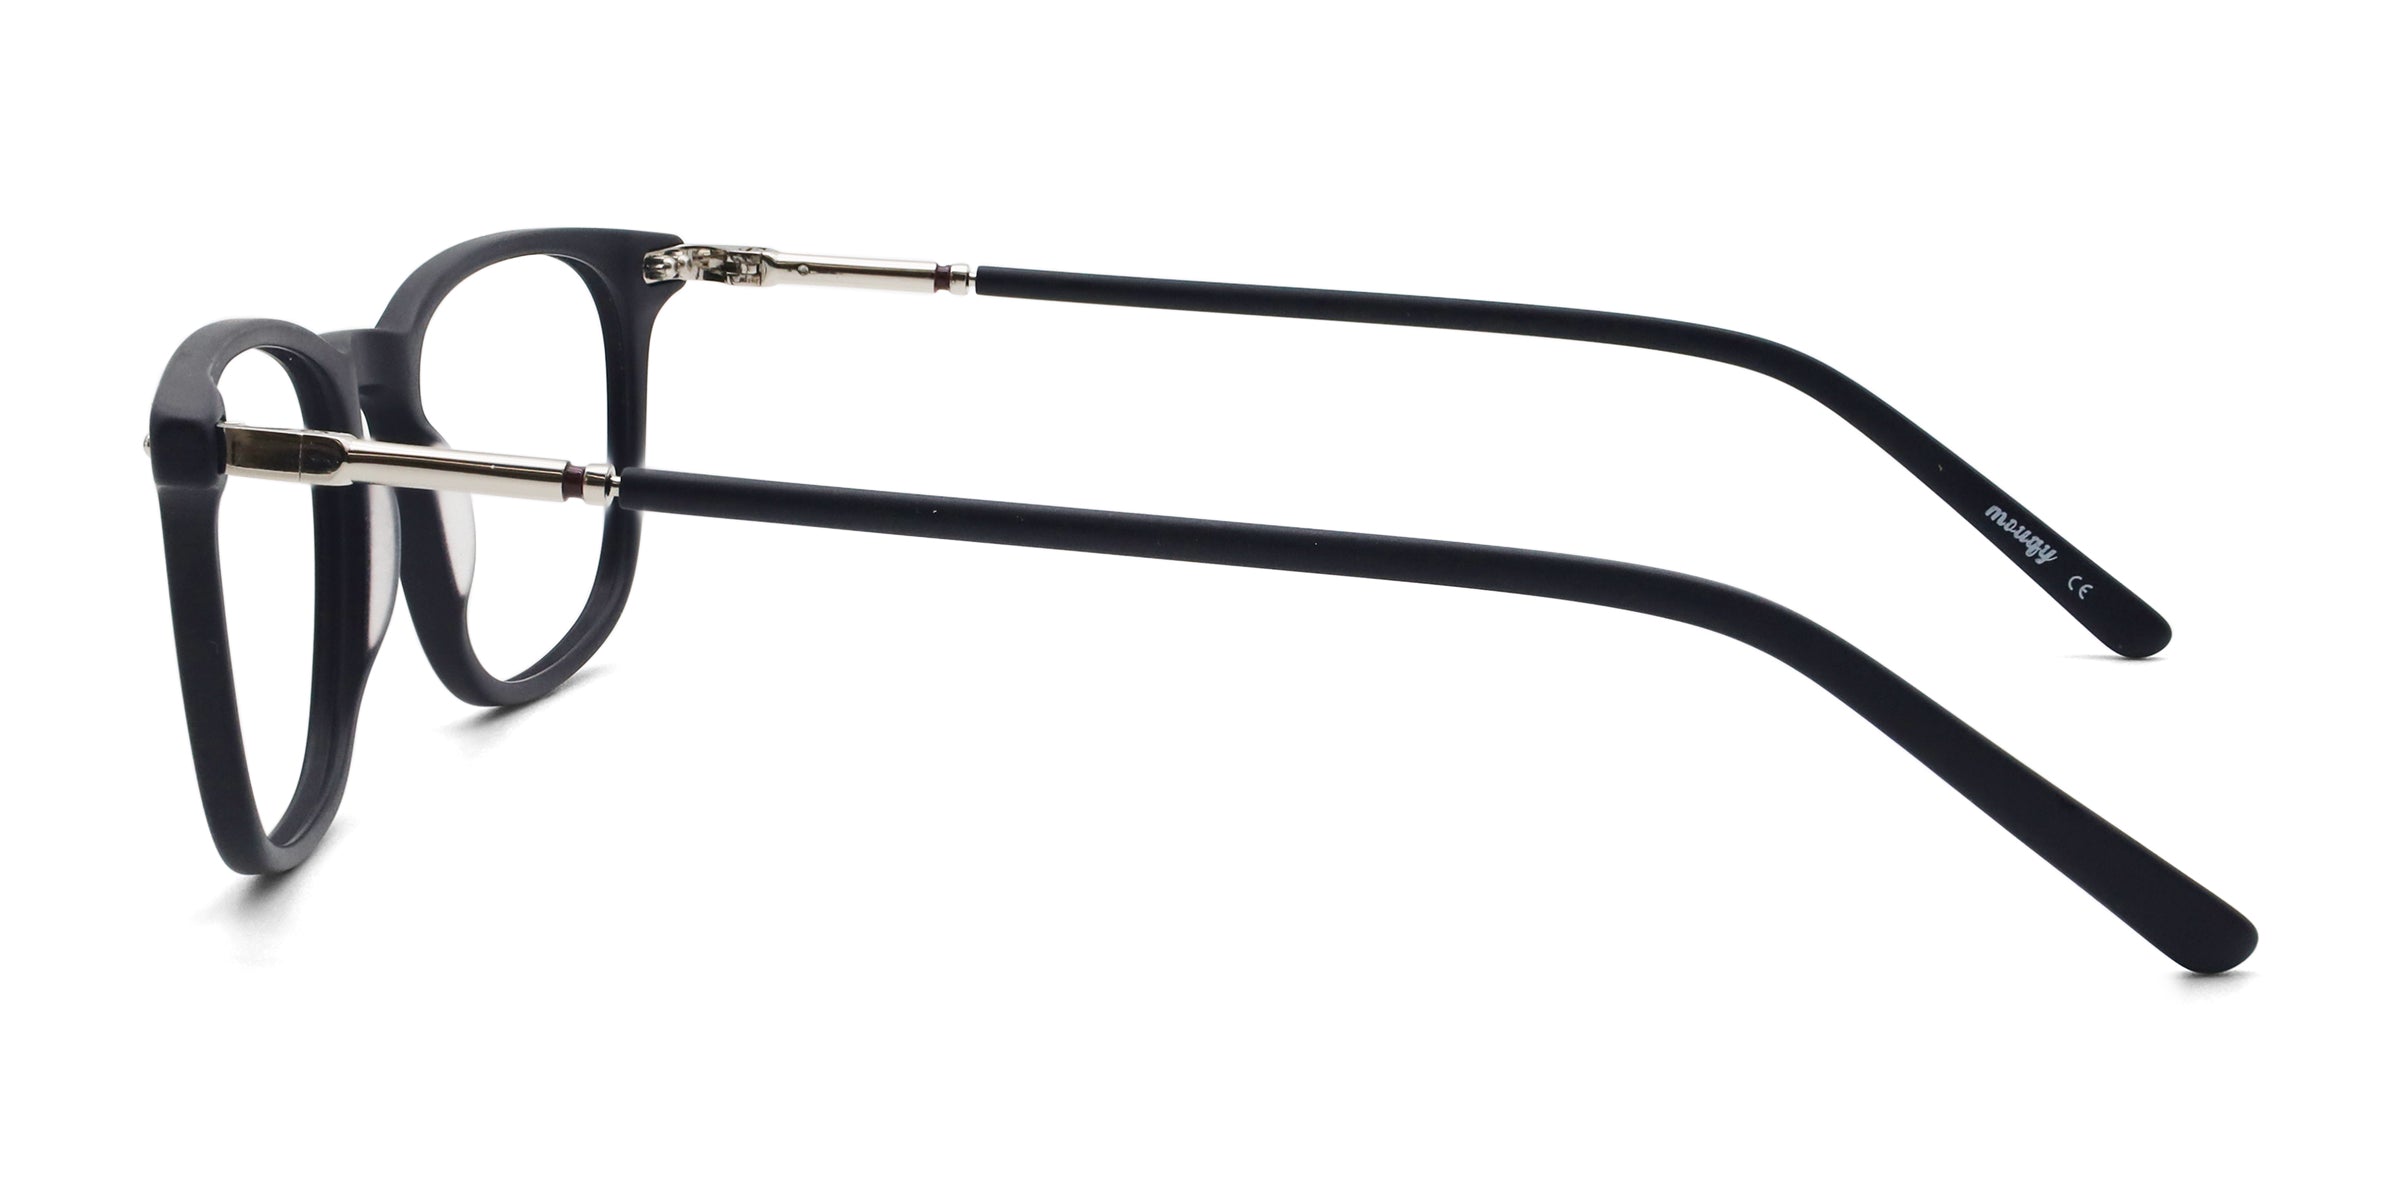 Queen Square Black eyeglasses frames side view